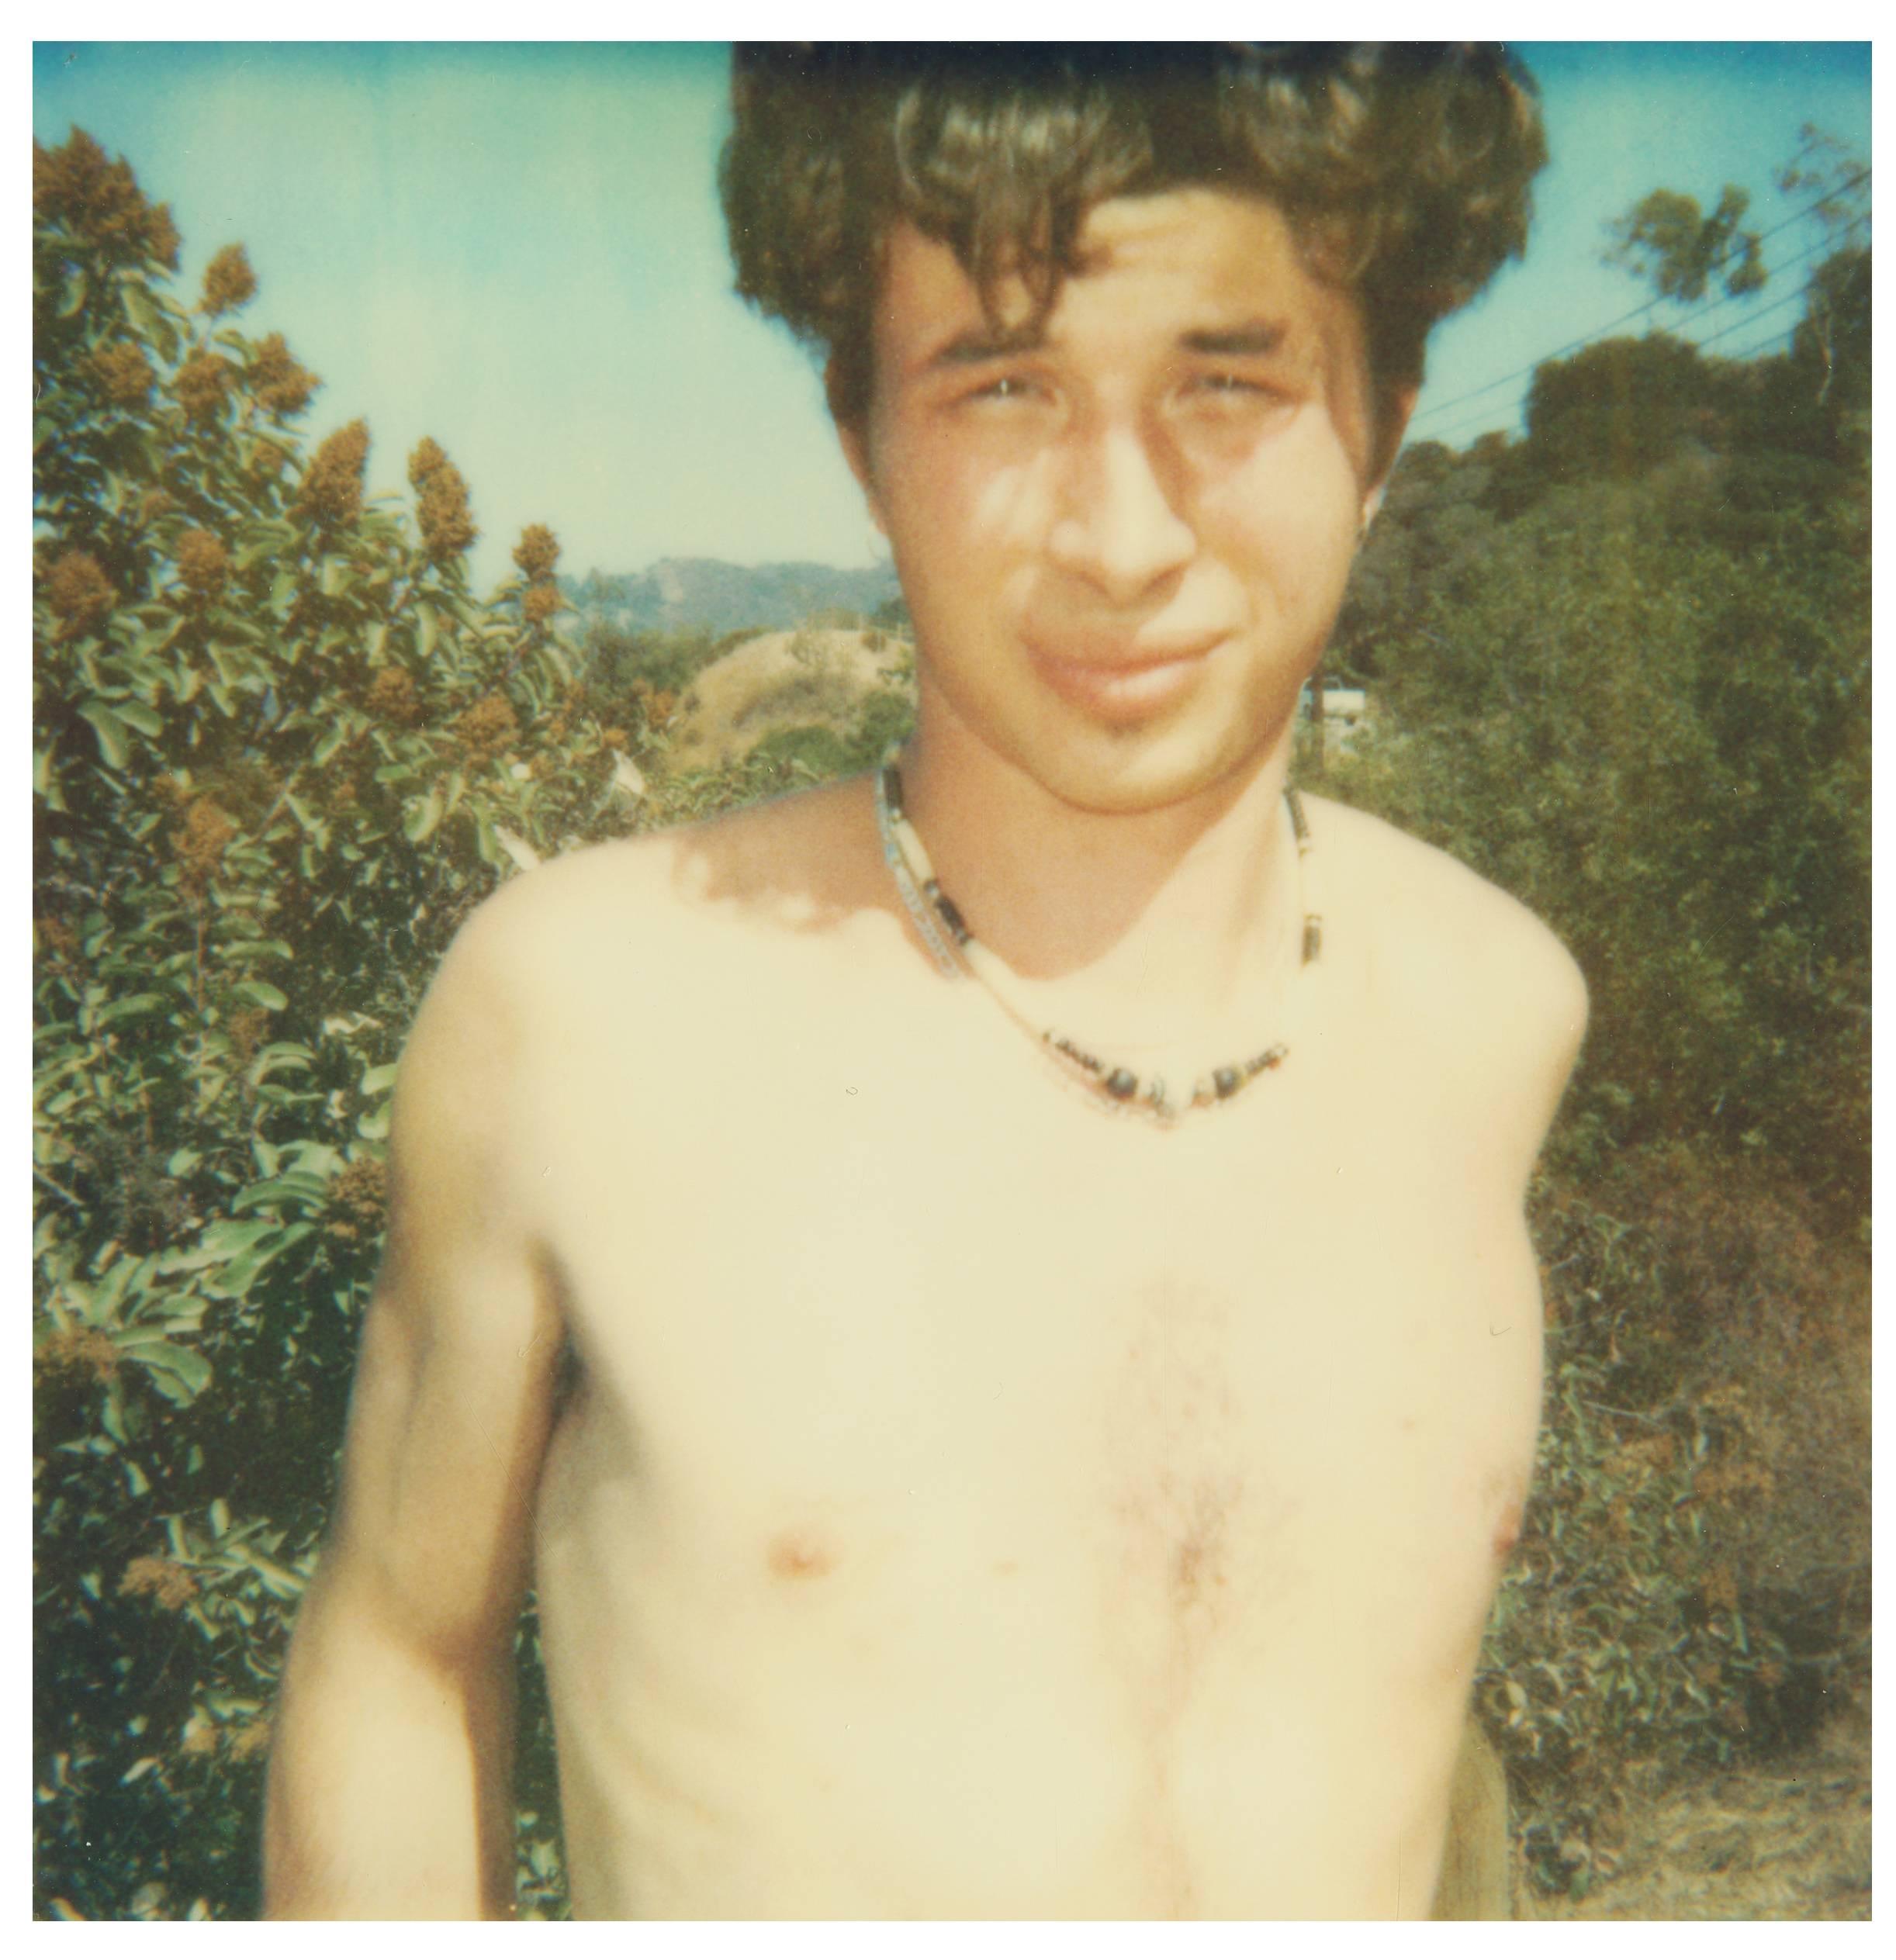 Portrait Photograph Stefanie Schneider - Jungle Boy (back in the 80's) 